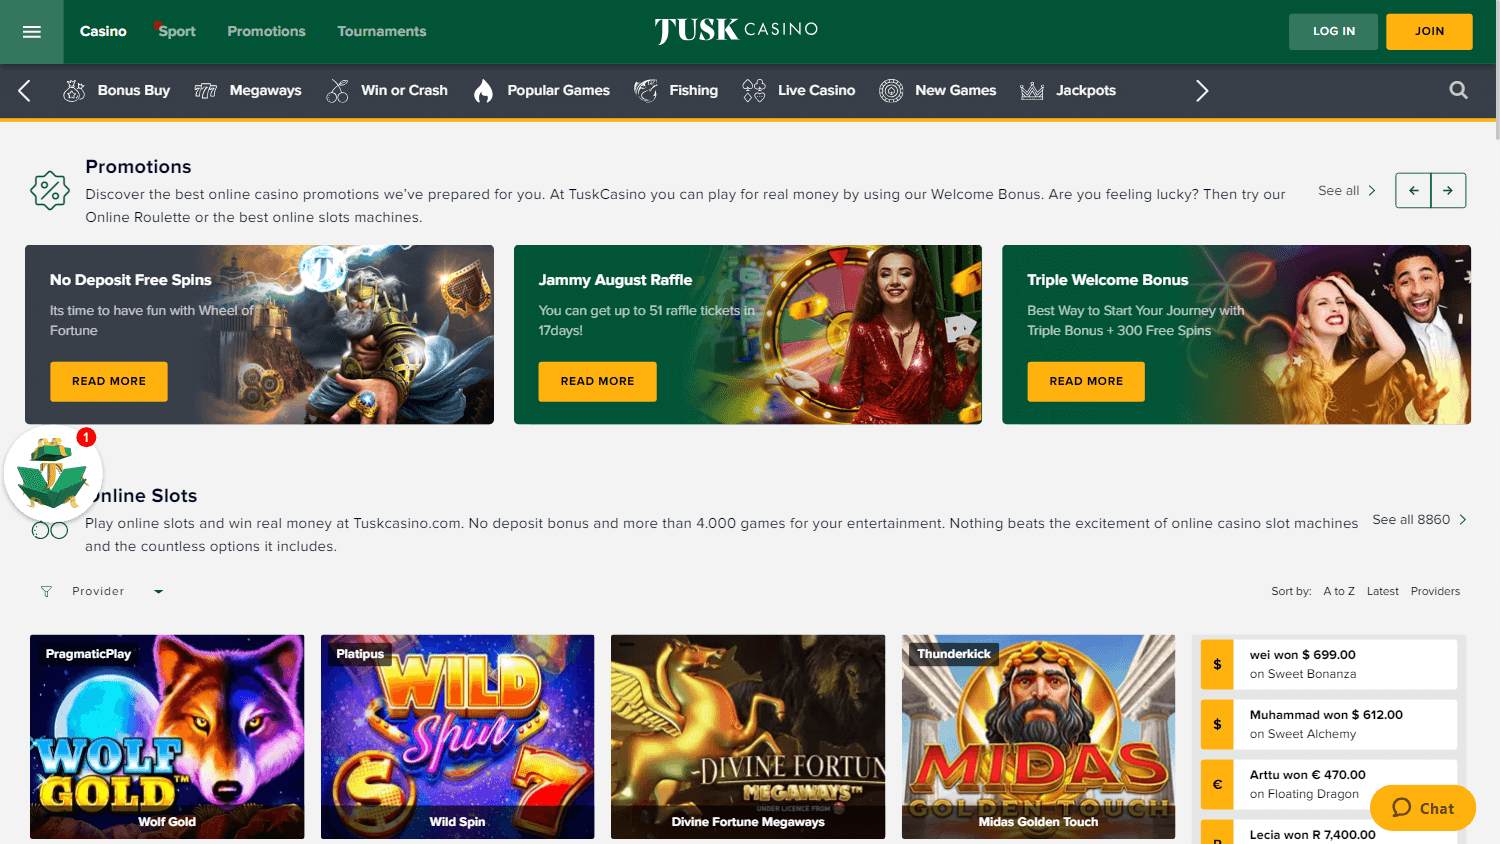 tusk_casino_game_gallery_desktop